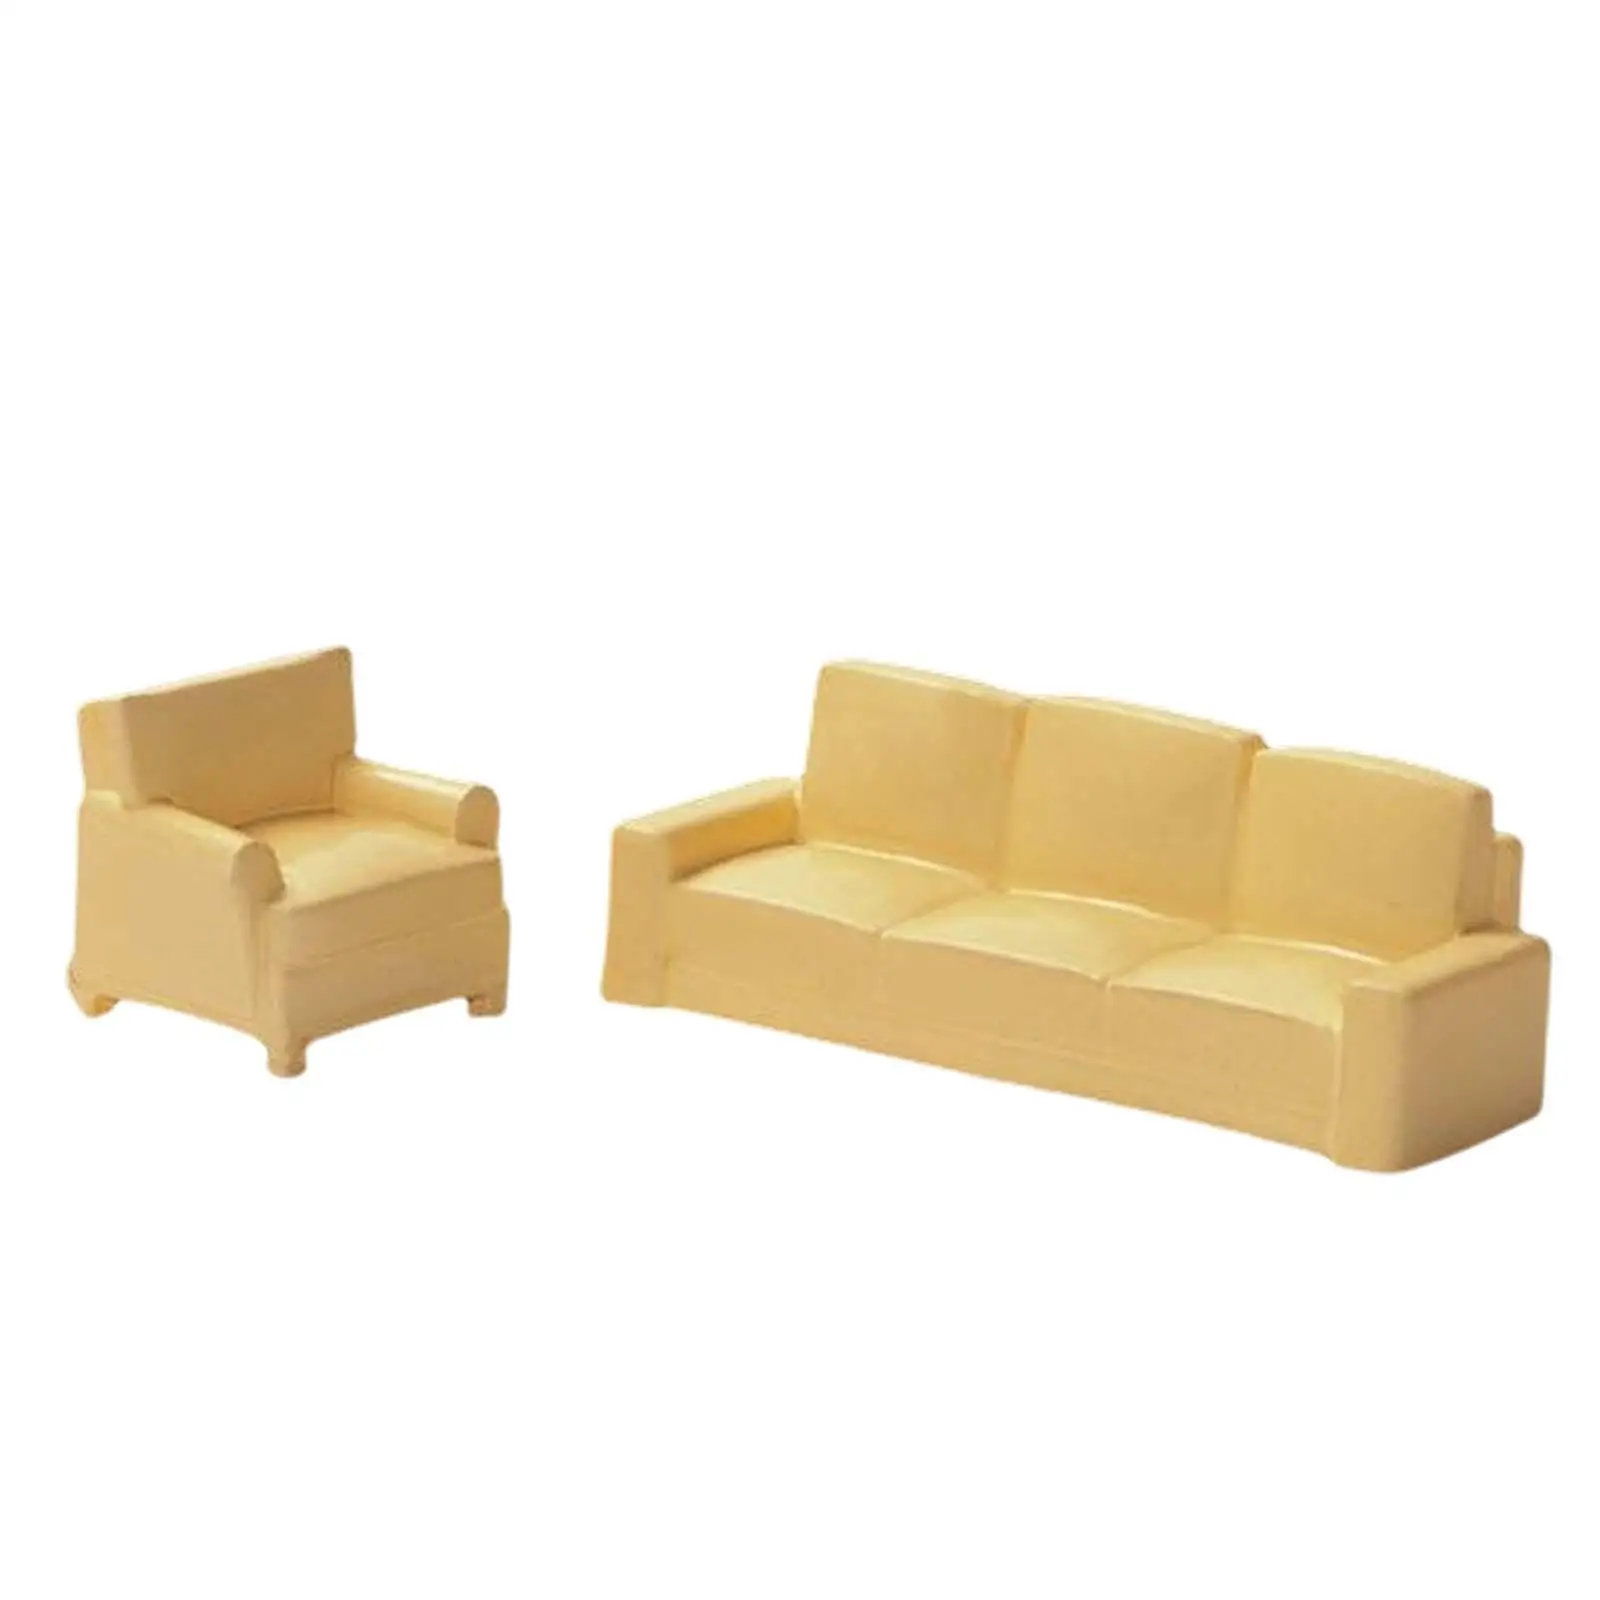 2x Dollhouse Sofa Couch, Handcraft Dollhouse Furnishings, Simulation Mini Furniture for 1/64 Dollhouse Diorama